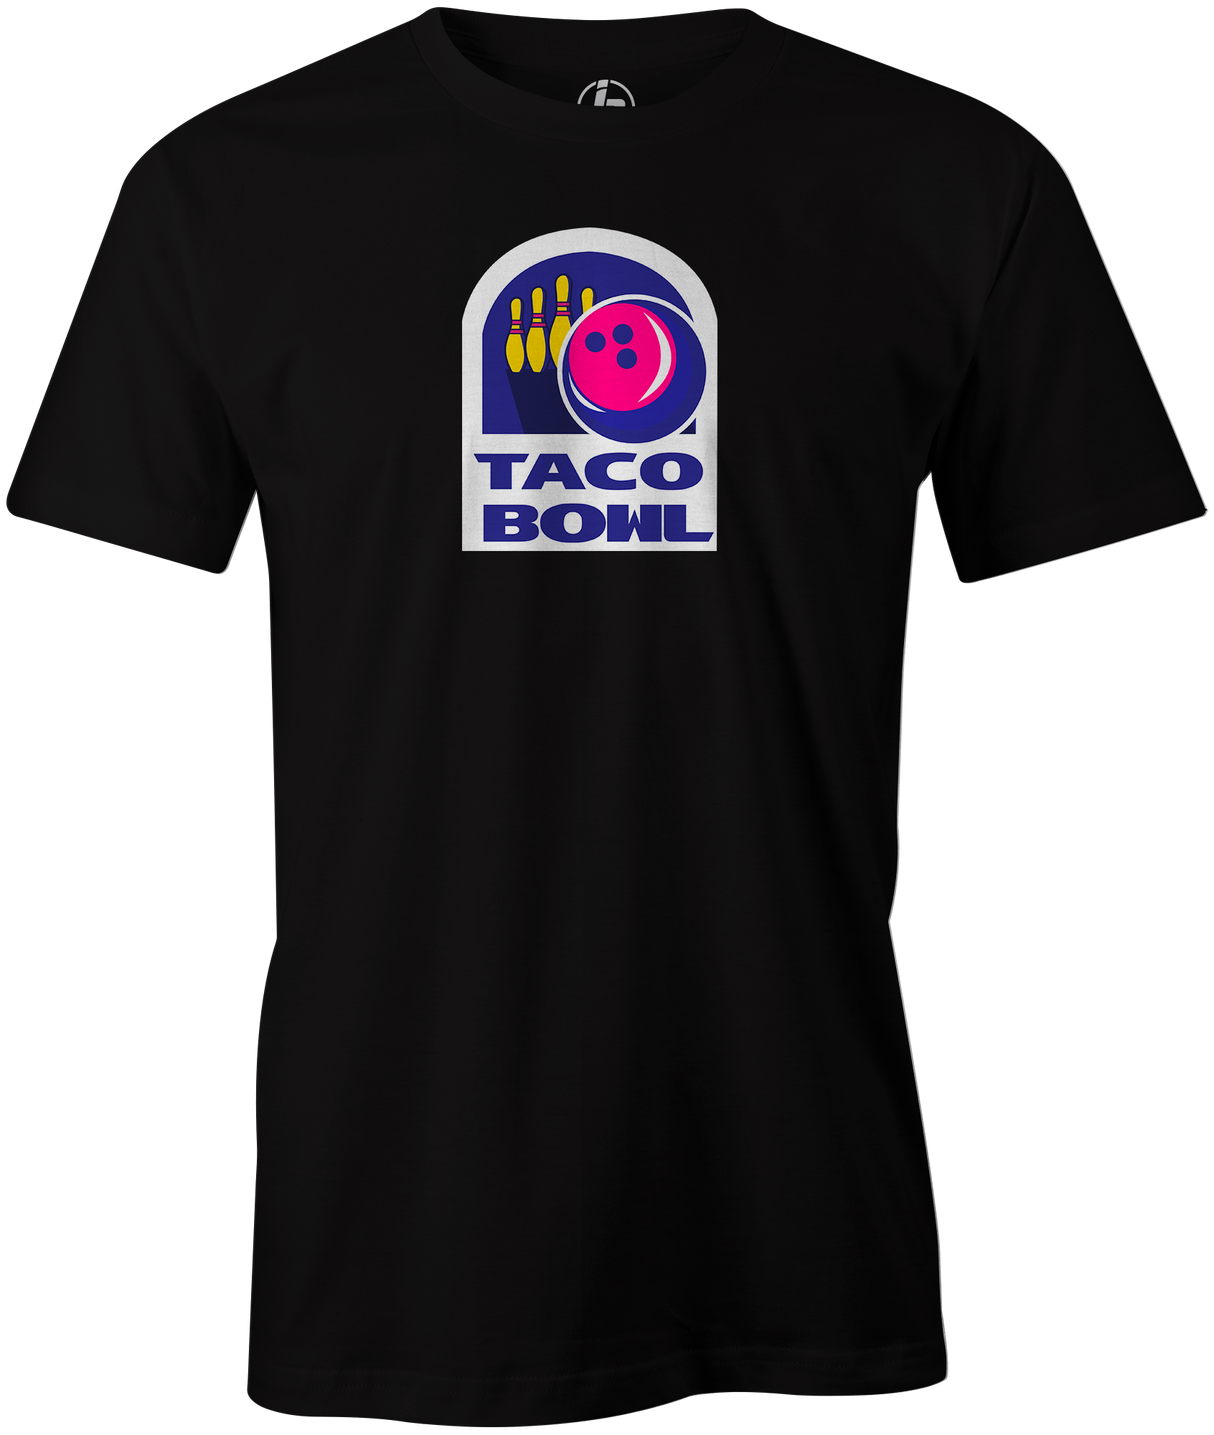 Taco Bowl Men's T-shirt, Black, Funny, novelty, taco bell, tee, tee-shirt, teeshirt, tshirt, bowling, tacos